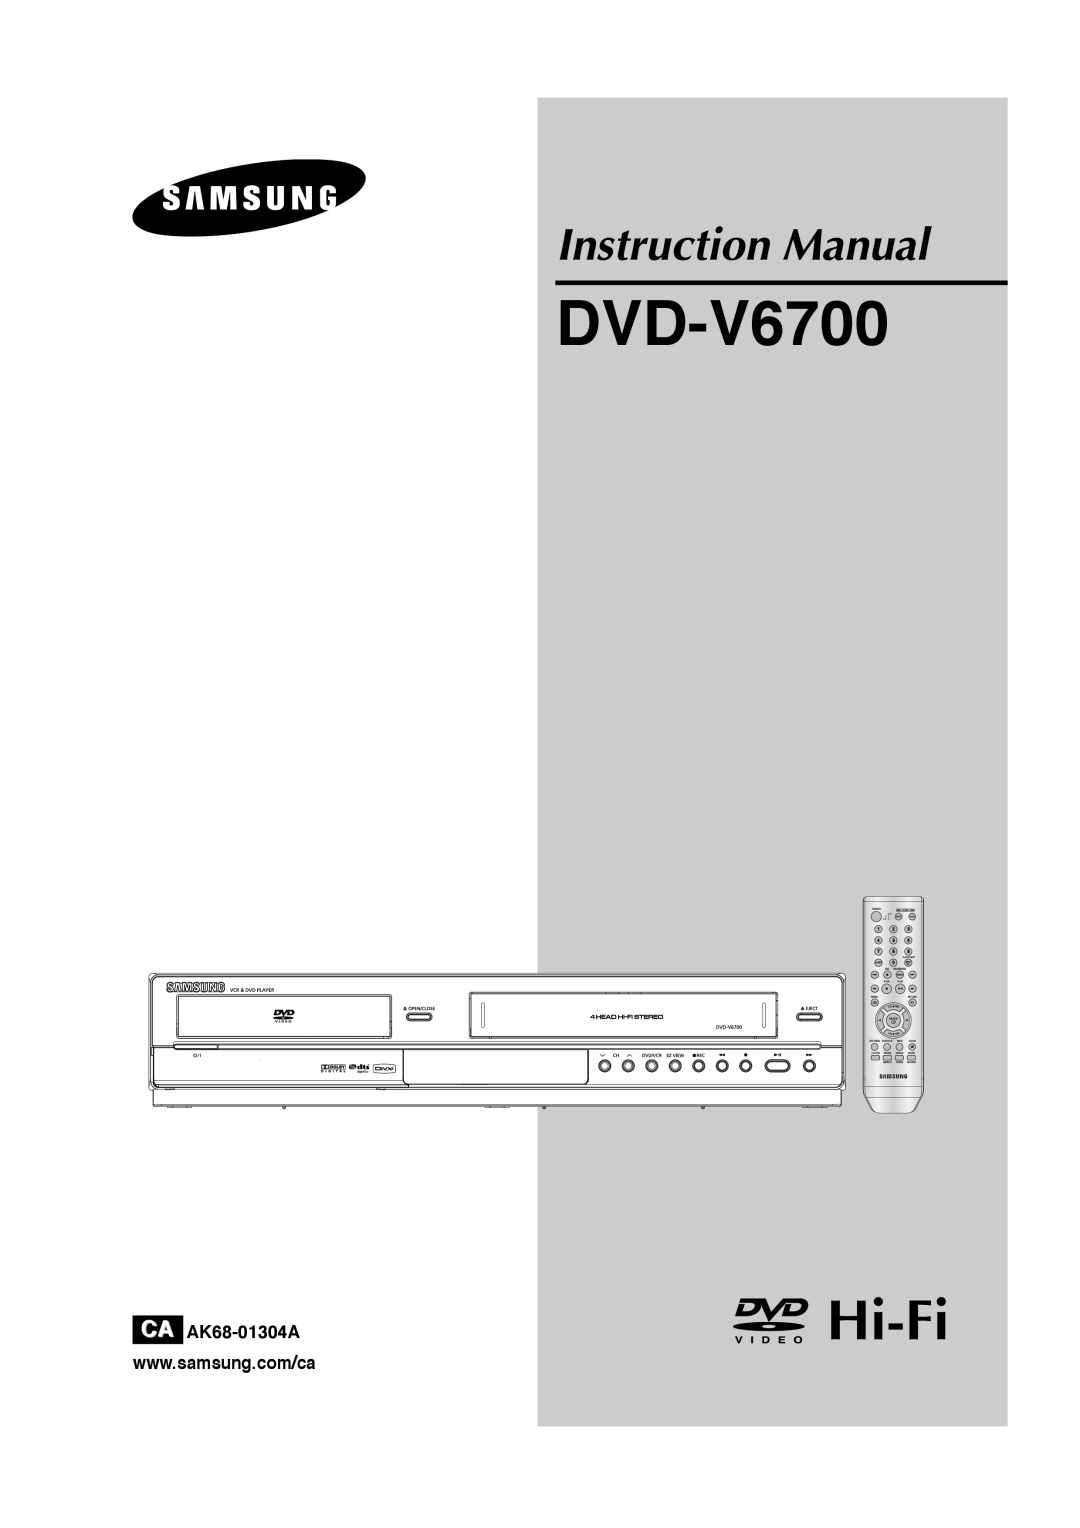 Samsung V6700-XAC, 20070205090323359 instruction manual DVD-V6700, Instruction Manual, CA AK68-01304A 